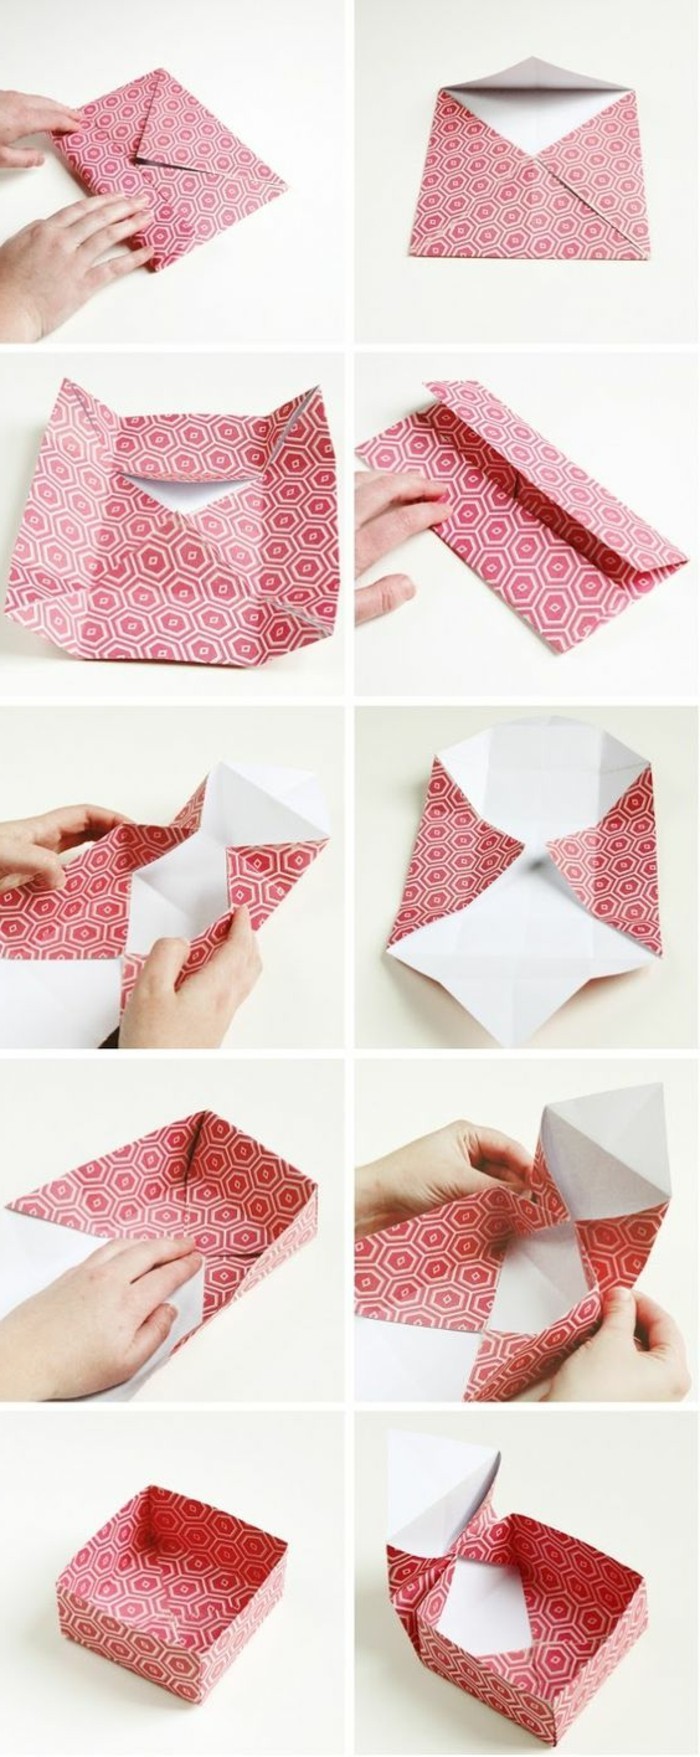 chiffres origami coffret cadeau origami origami avec bricolage origami papier modèle